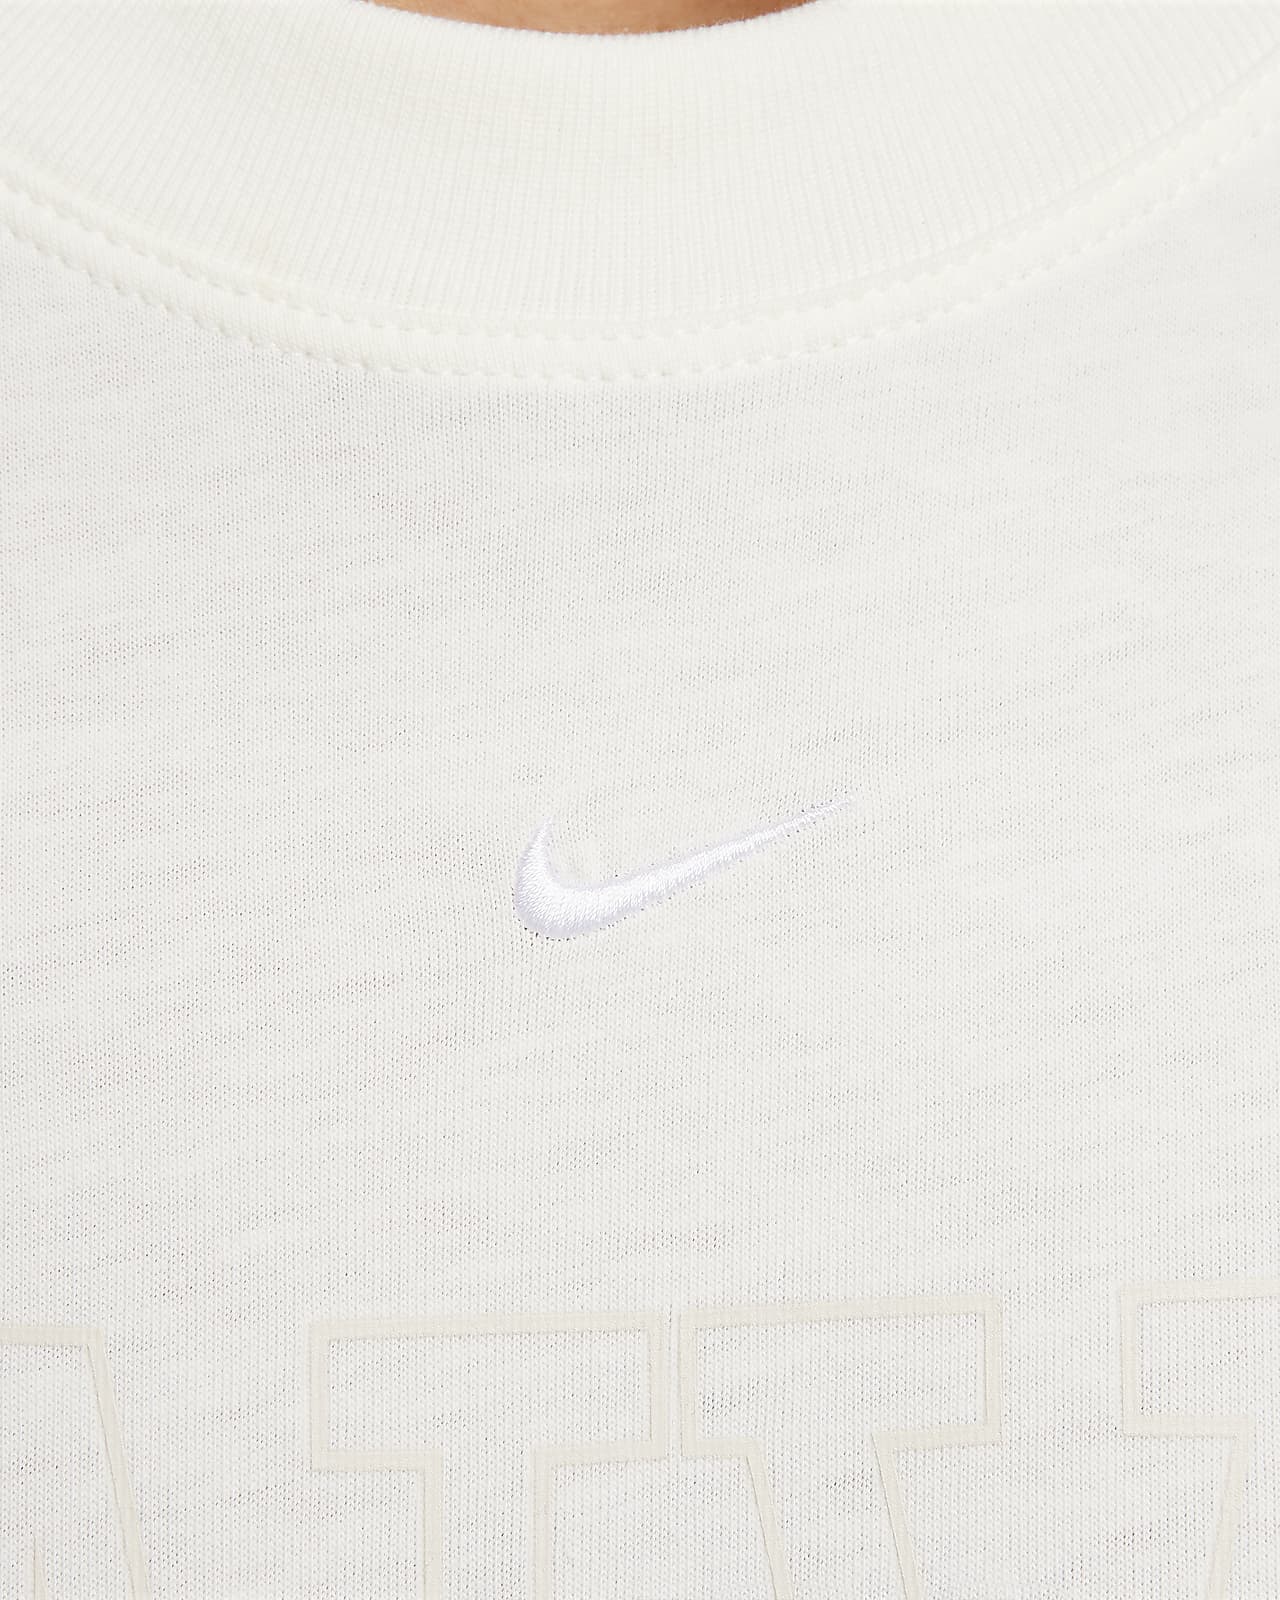 Nike Mallas Sportswear Favorites Graphic, Free Shipping $74.99+